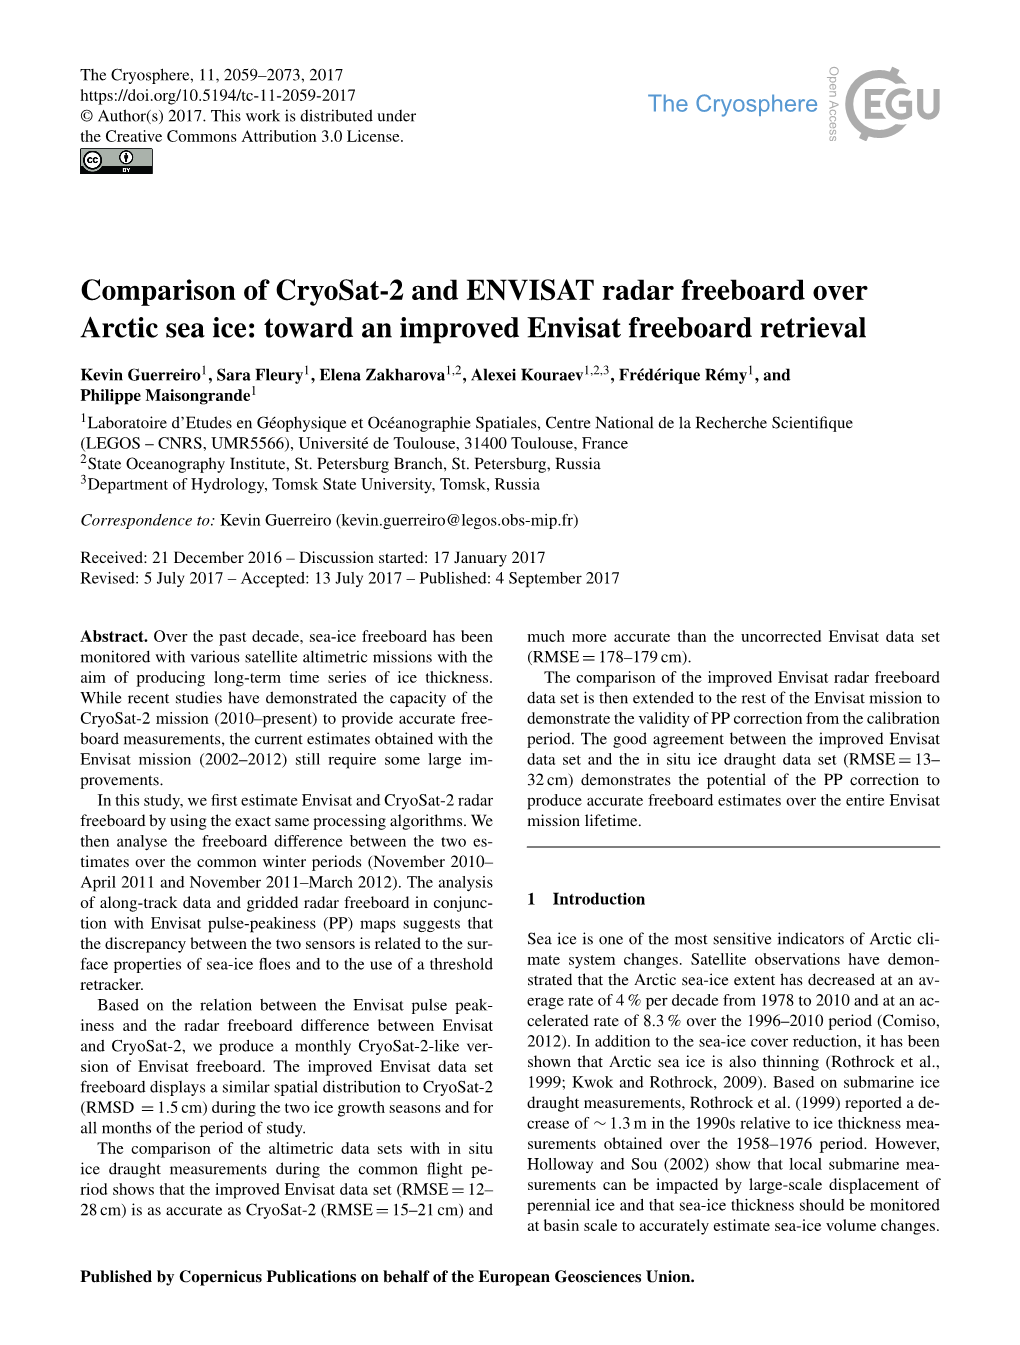 Comparison of Cryosat-2 and ENVISAT Radar Freeboard Over Arctic Sea Ice: Toward an Improved Envisat Freeboard Retrieval